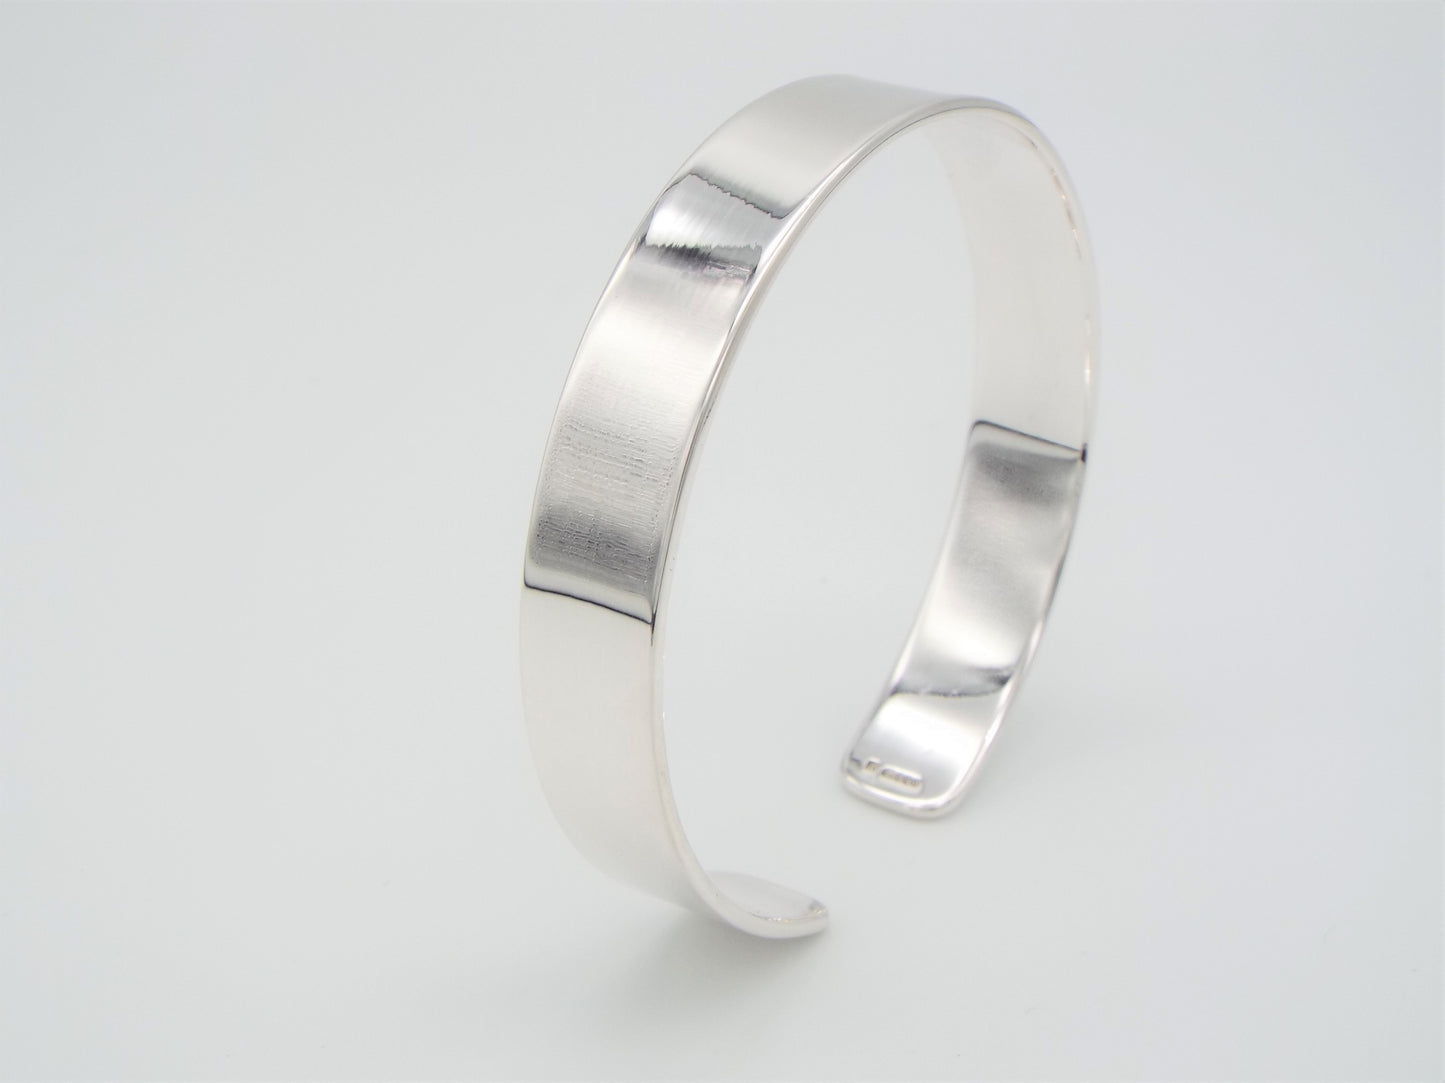 Smooth Polished Sterling Silver Cuff Bracelet - Medium